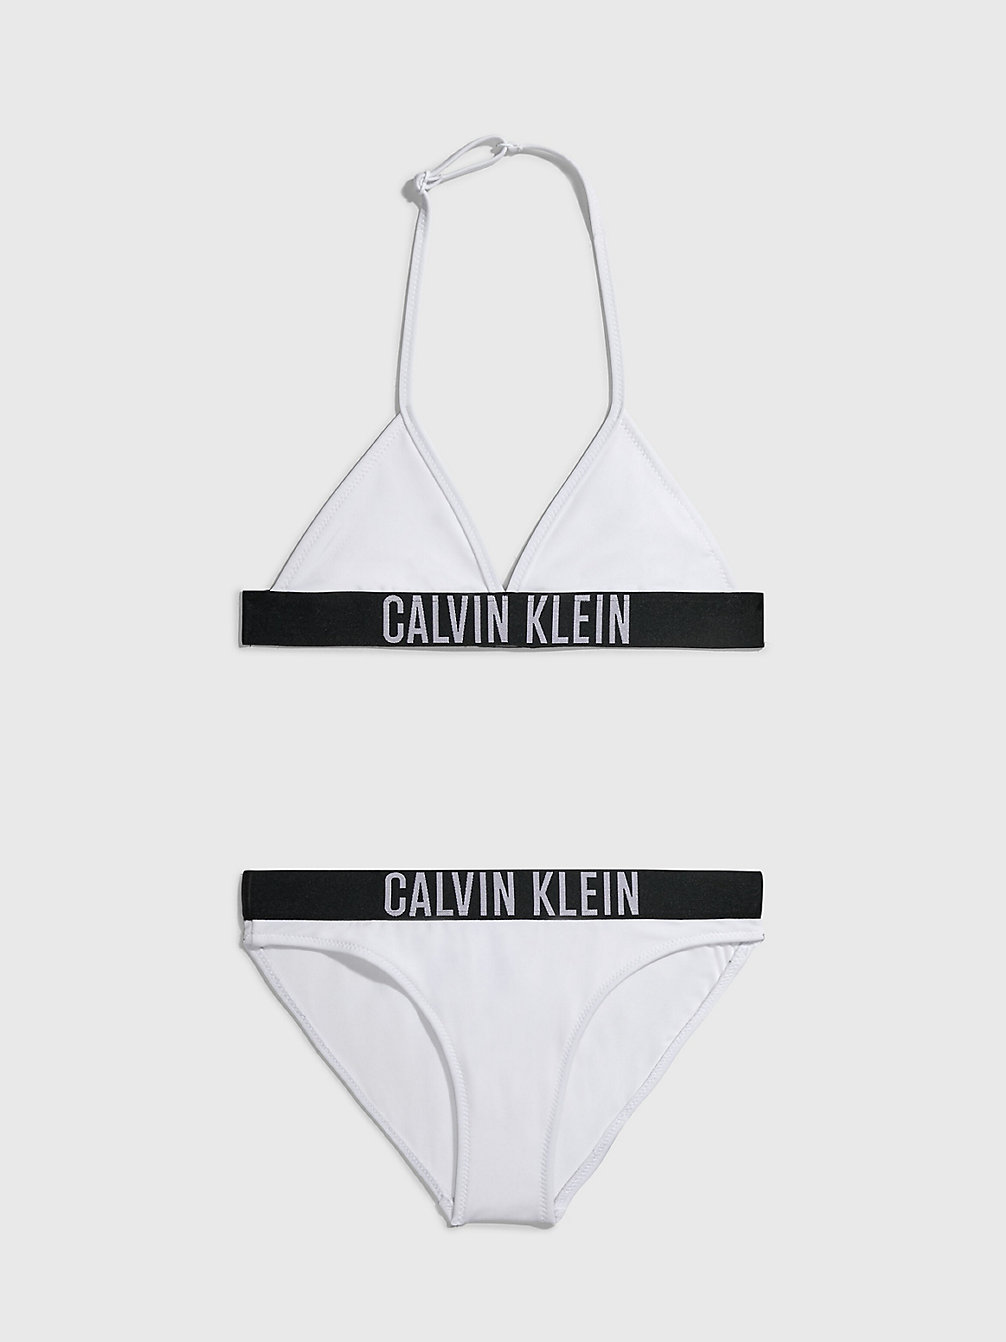 PVH CLASSIC WHITE Ensemble Bikini Triangle Pour Fille - Intense Power undefined filles Calvin Klein